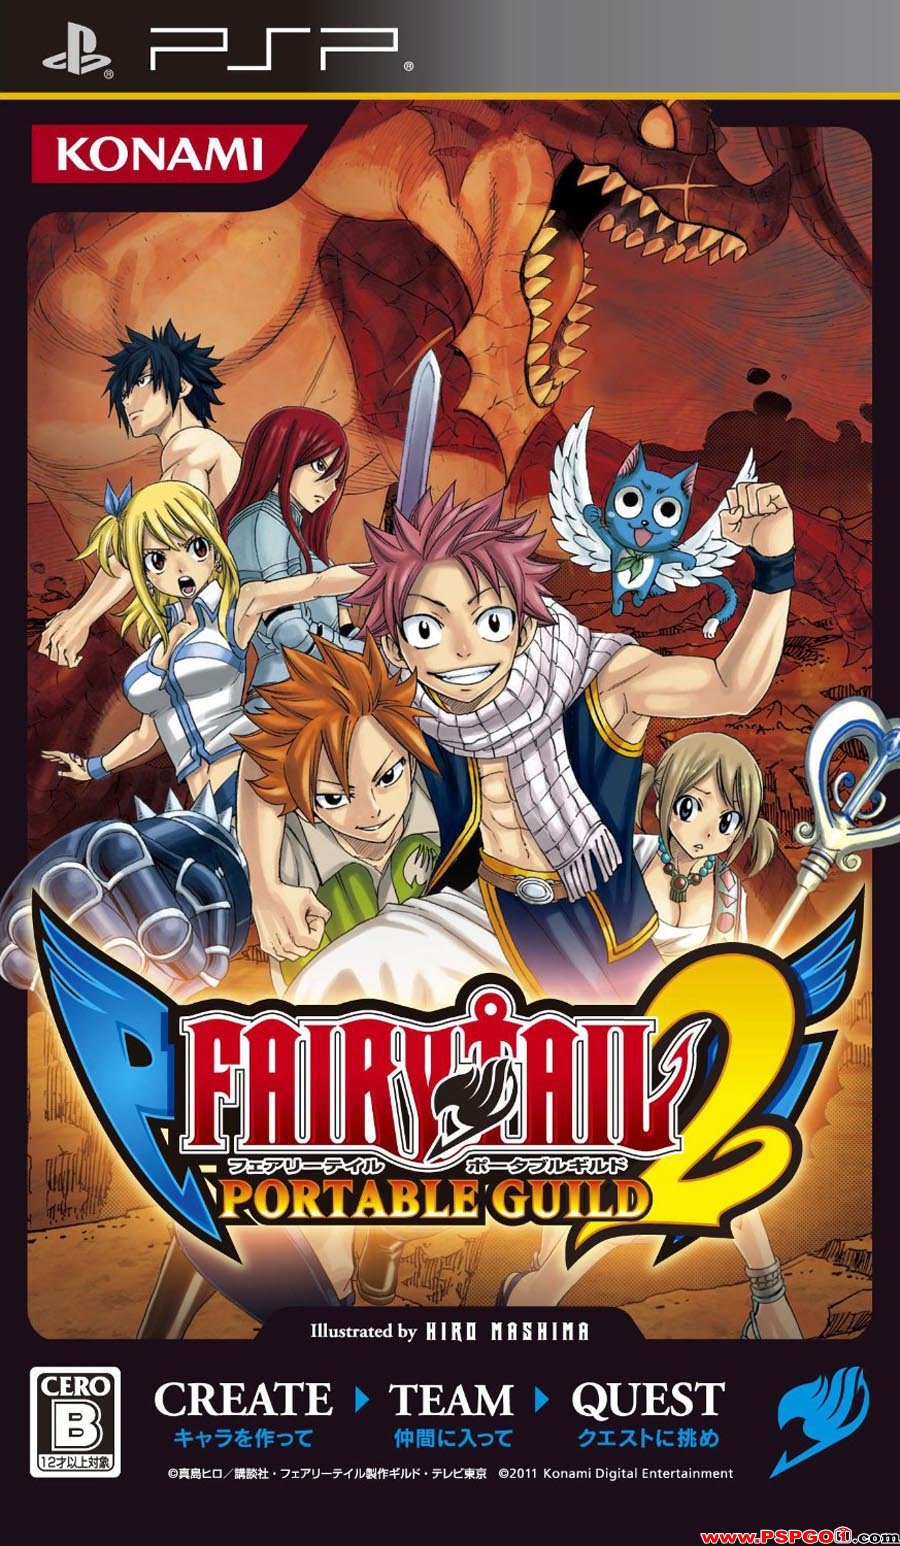 Fairy Tail gameplay featuring voice actors Katsuyuki Konishi and